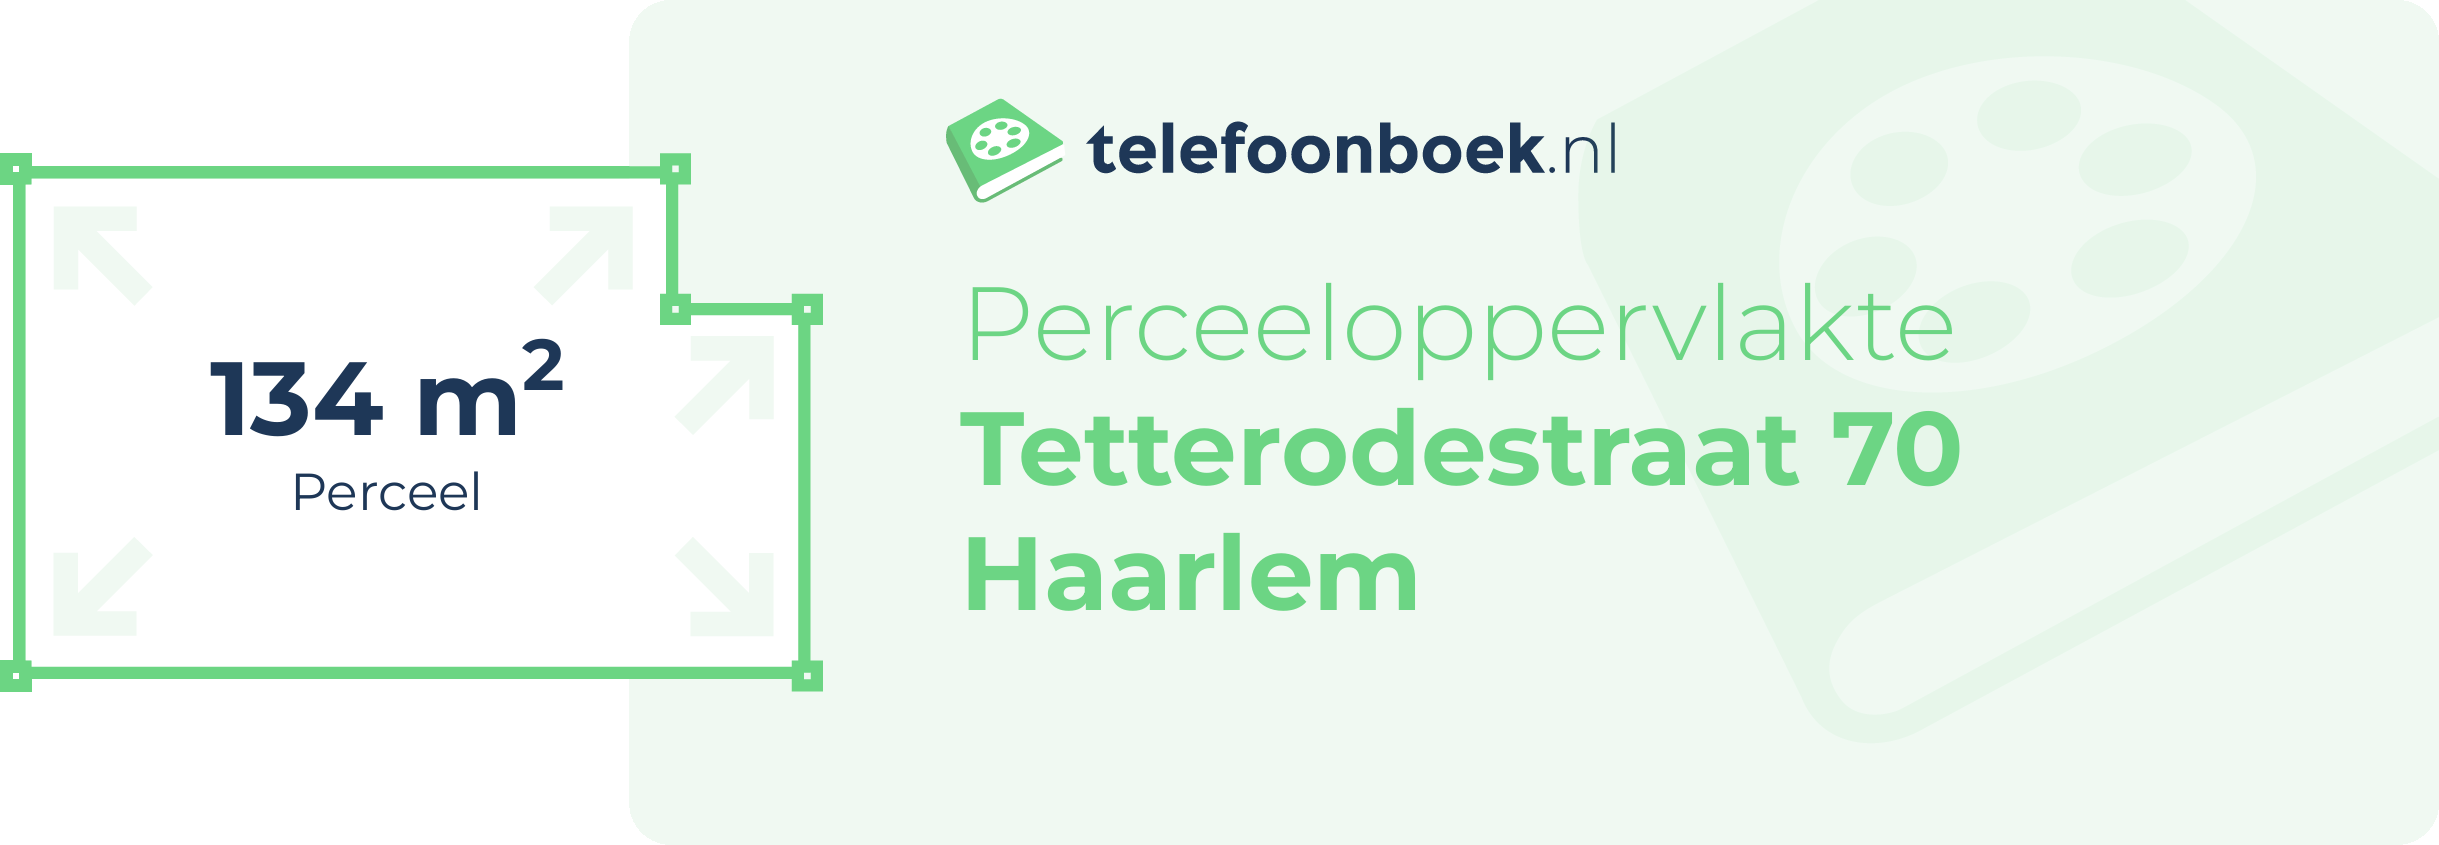 Perceeloppervlakte Tetterodestraat 70 Haarlem